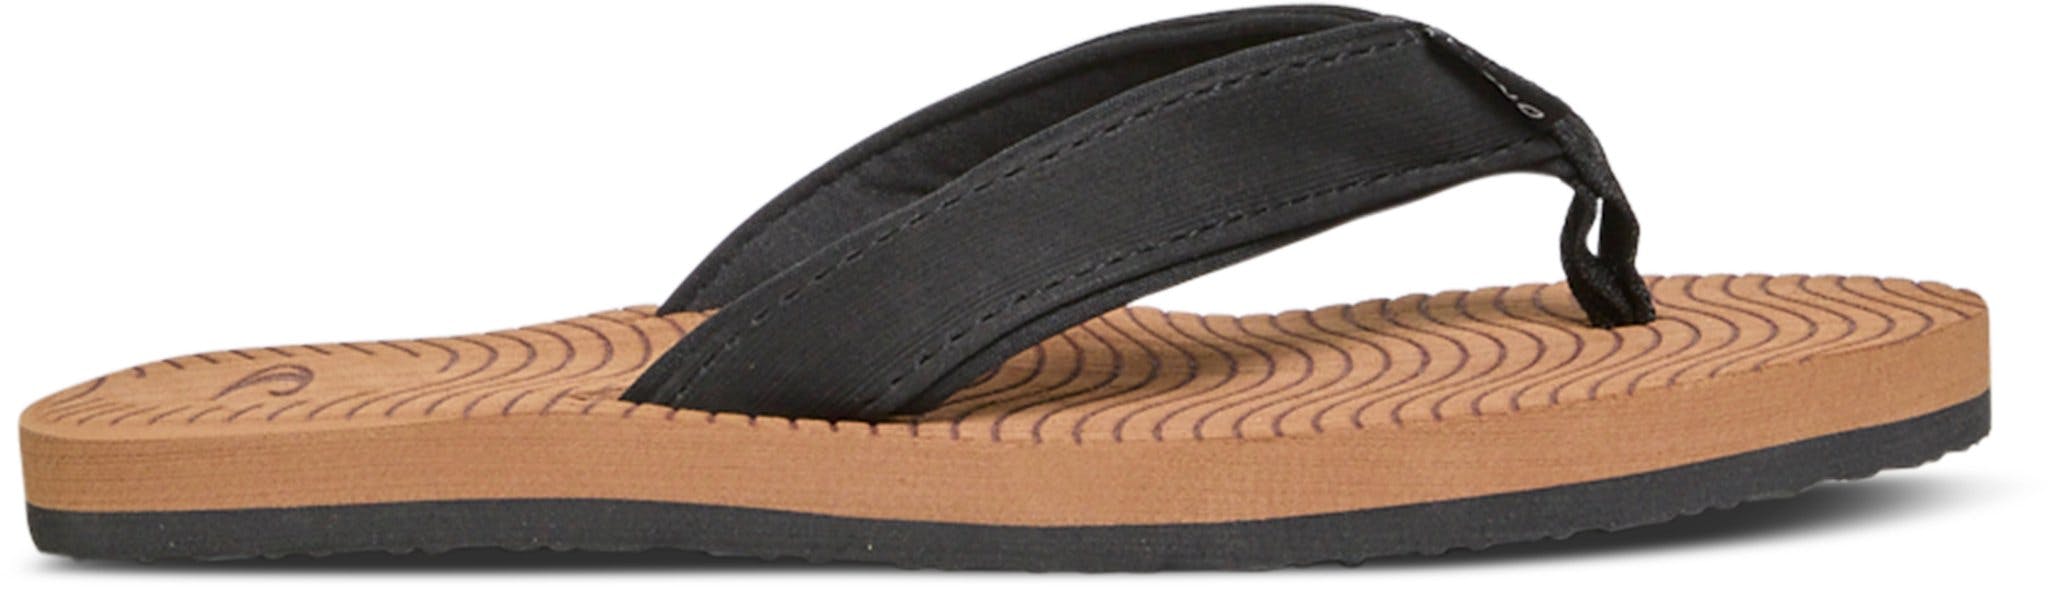 Product image for Koosh Sandals - Boys